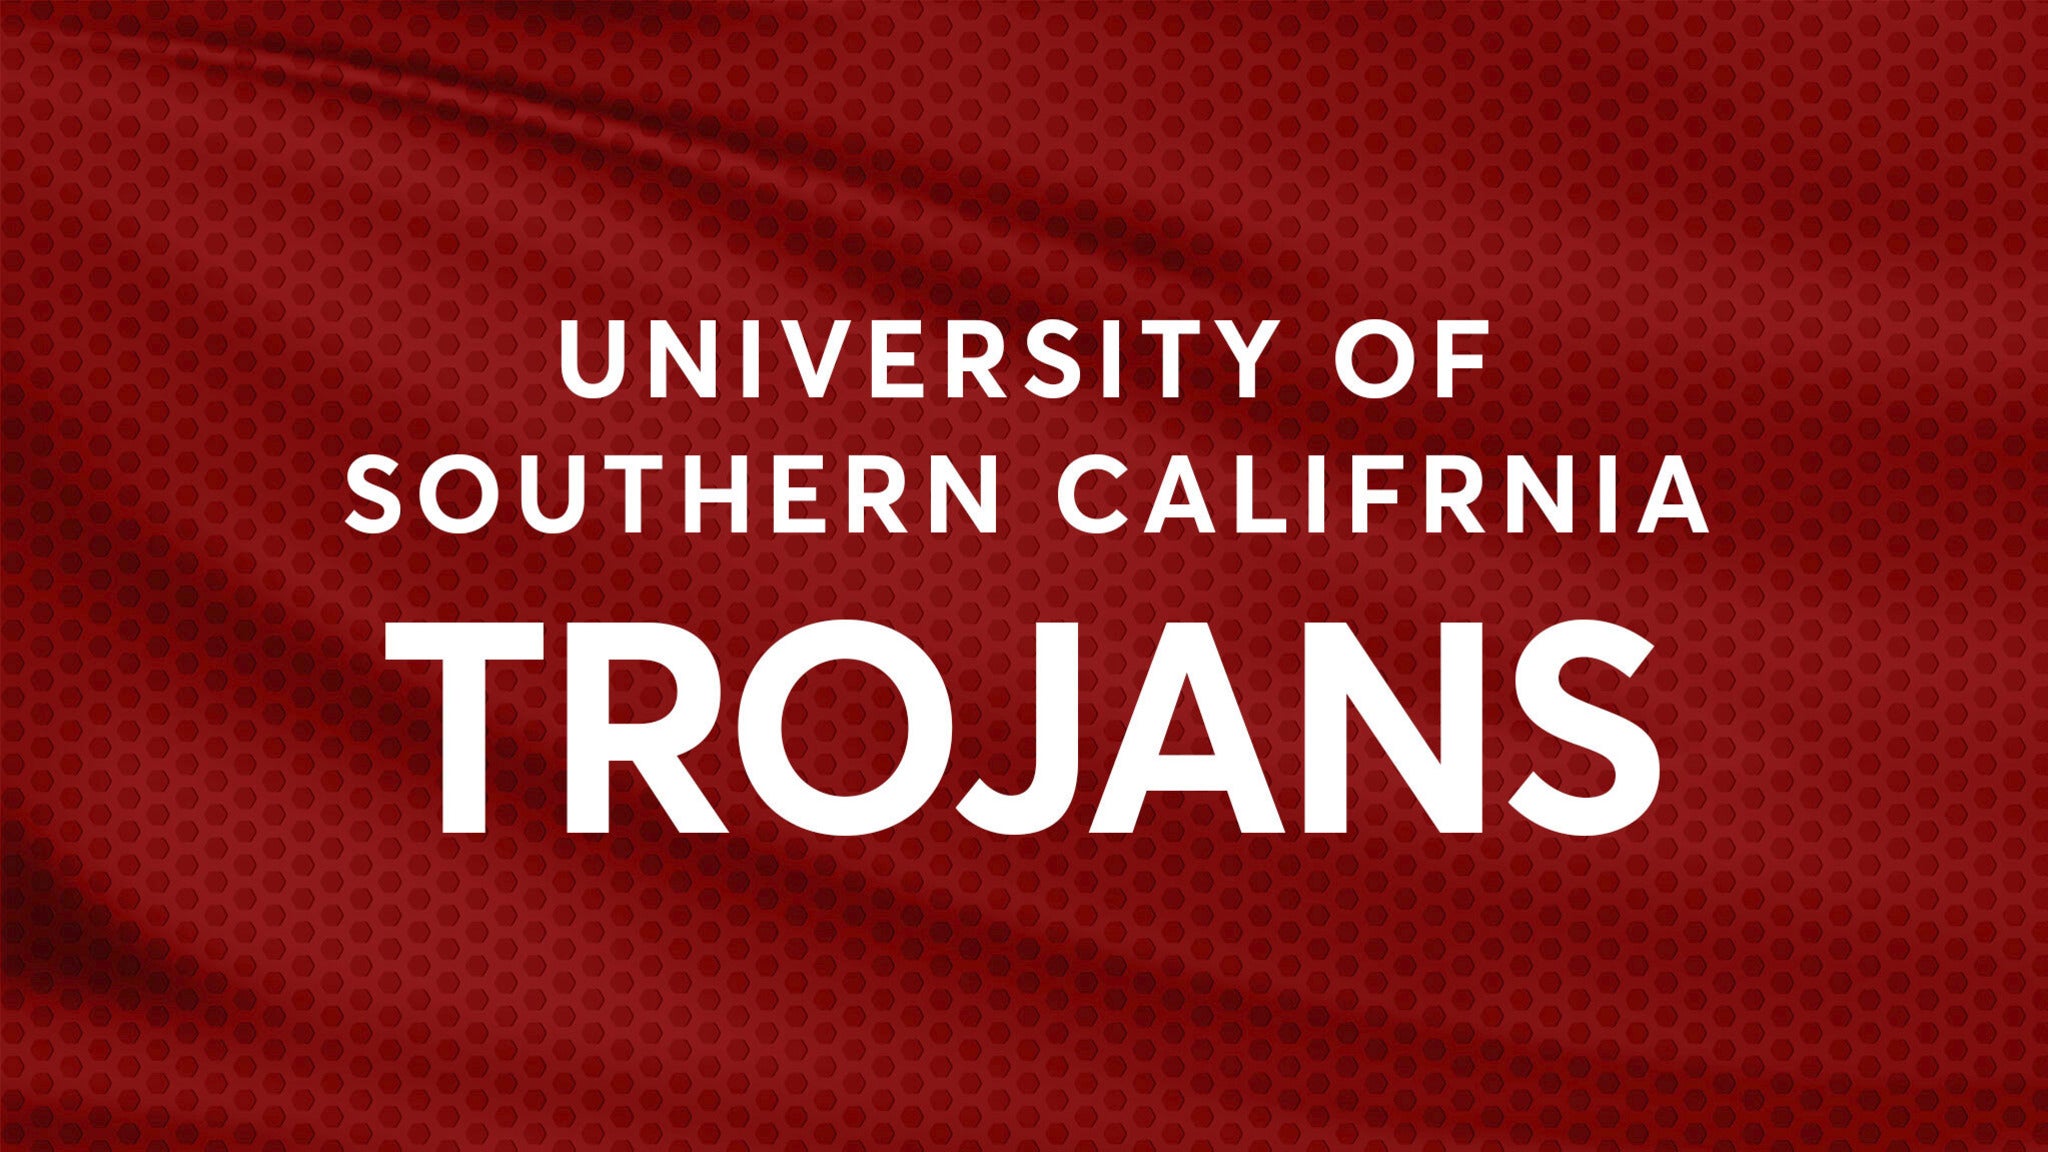 USC Trojans Football vs. Arizona Wildcats Football